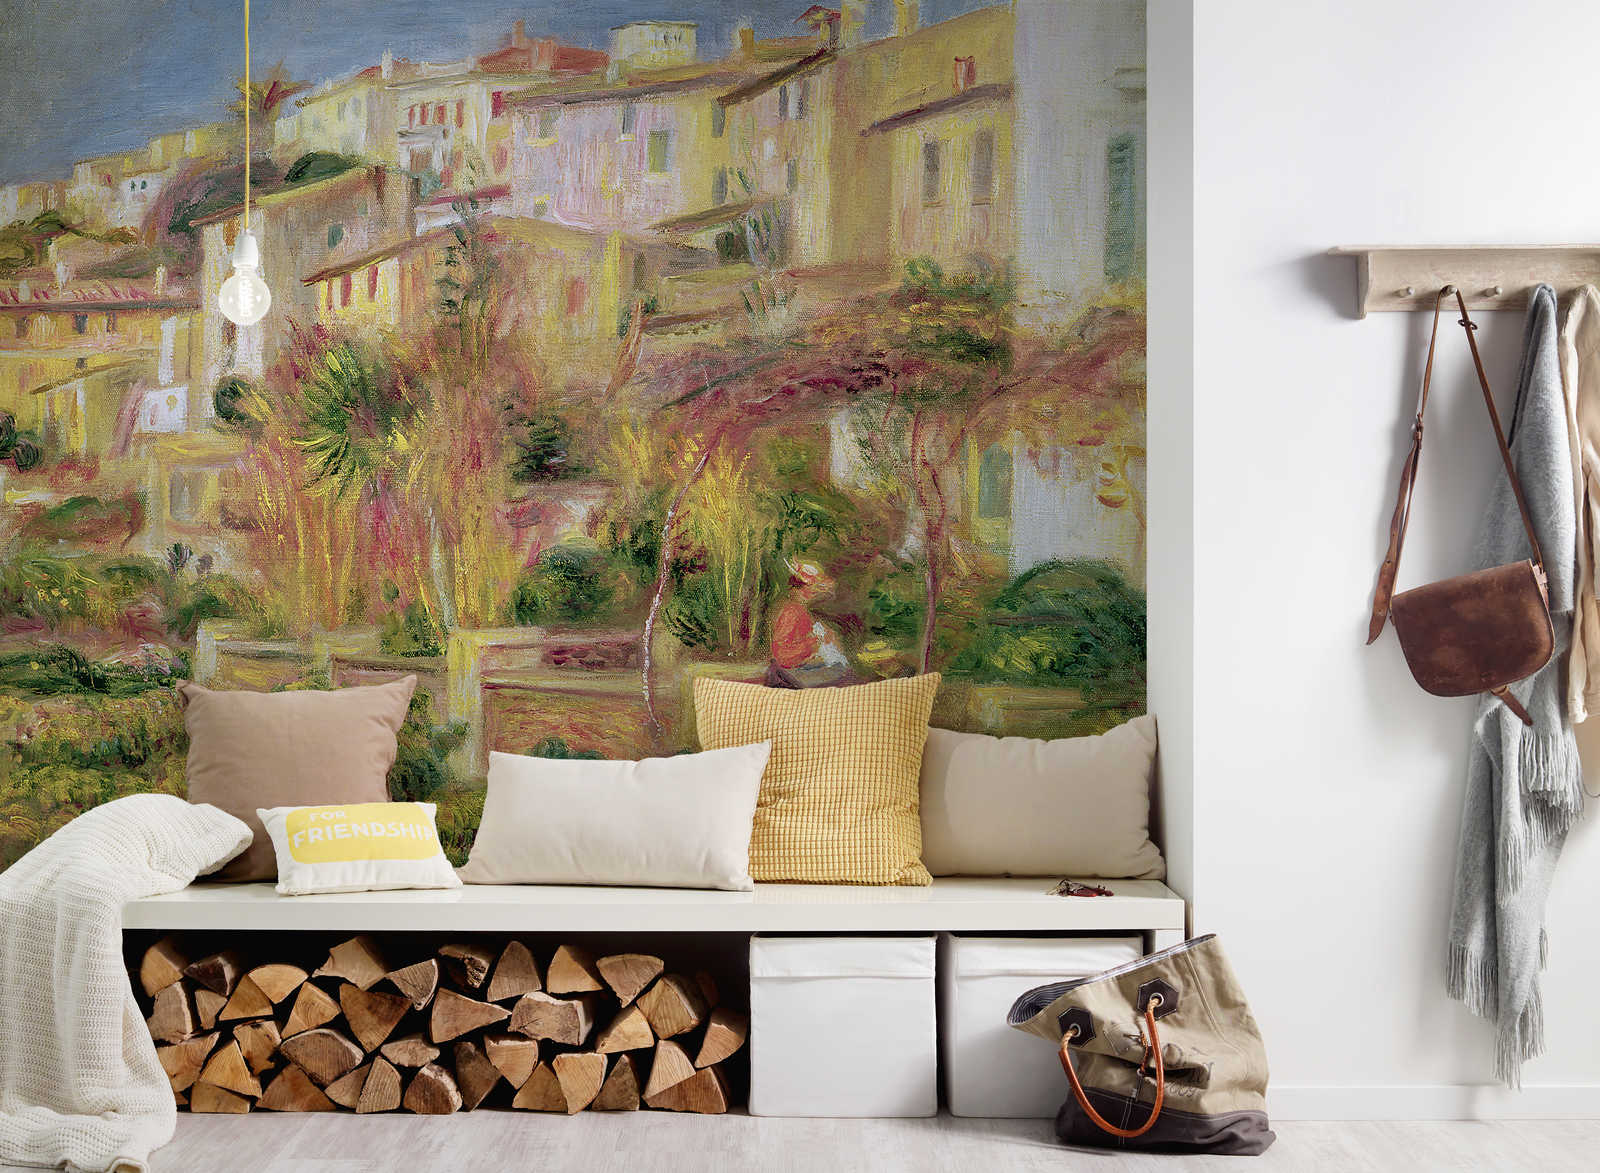             Photo wallpaper "Terrace in Cagnes" by Pierre Auguste Renoir
        